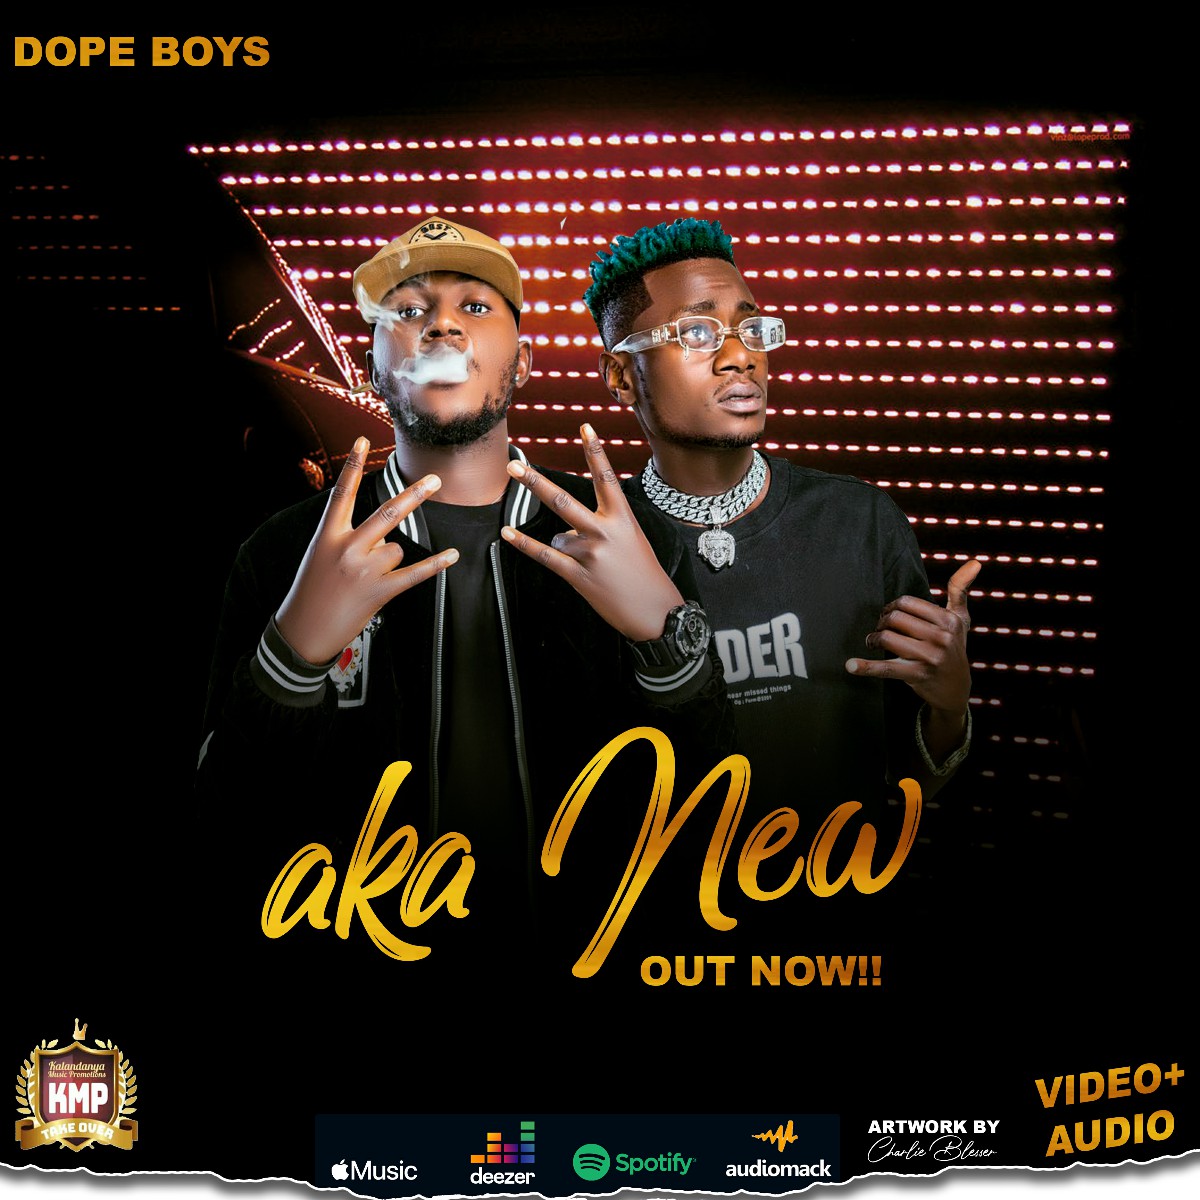 Dope Boys - Aka New